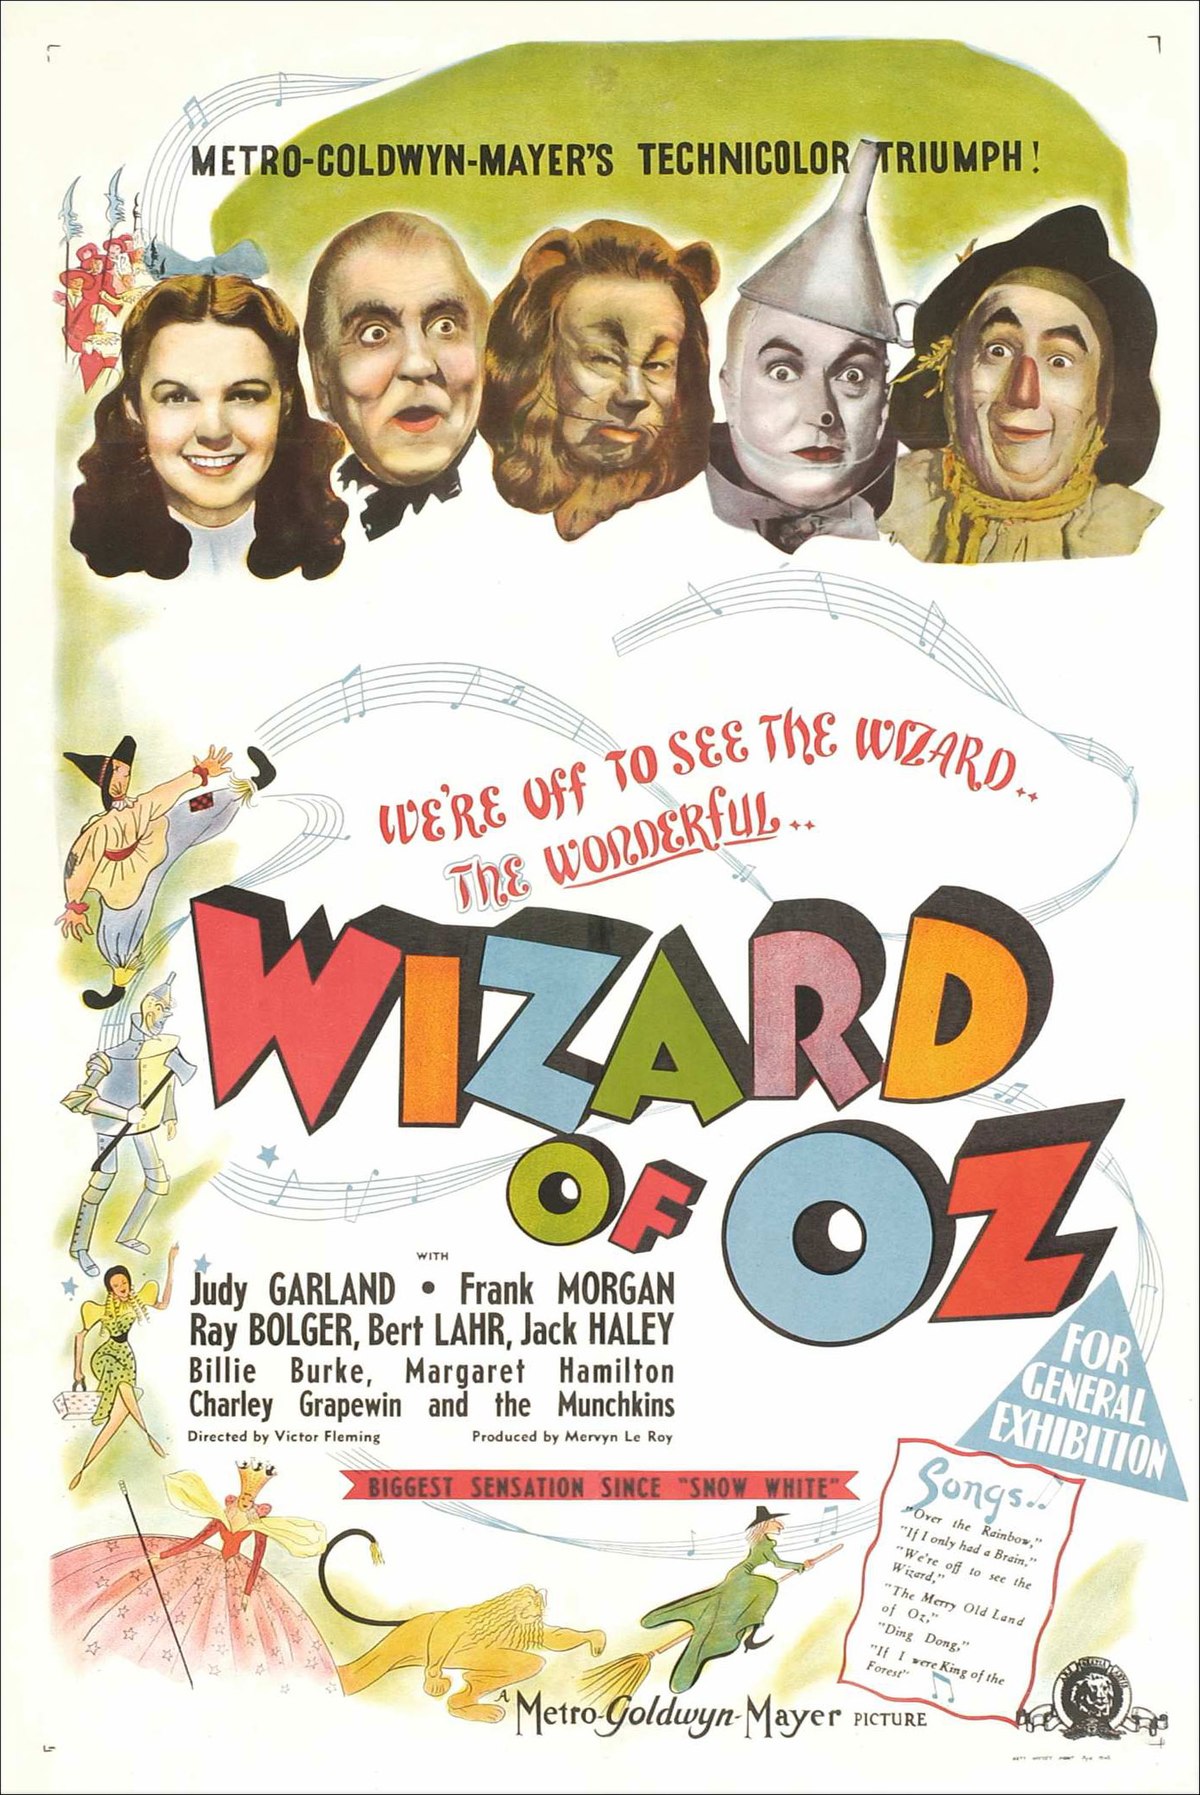 The Wizard of Oz (1939 film) - Wikipedia